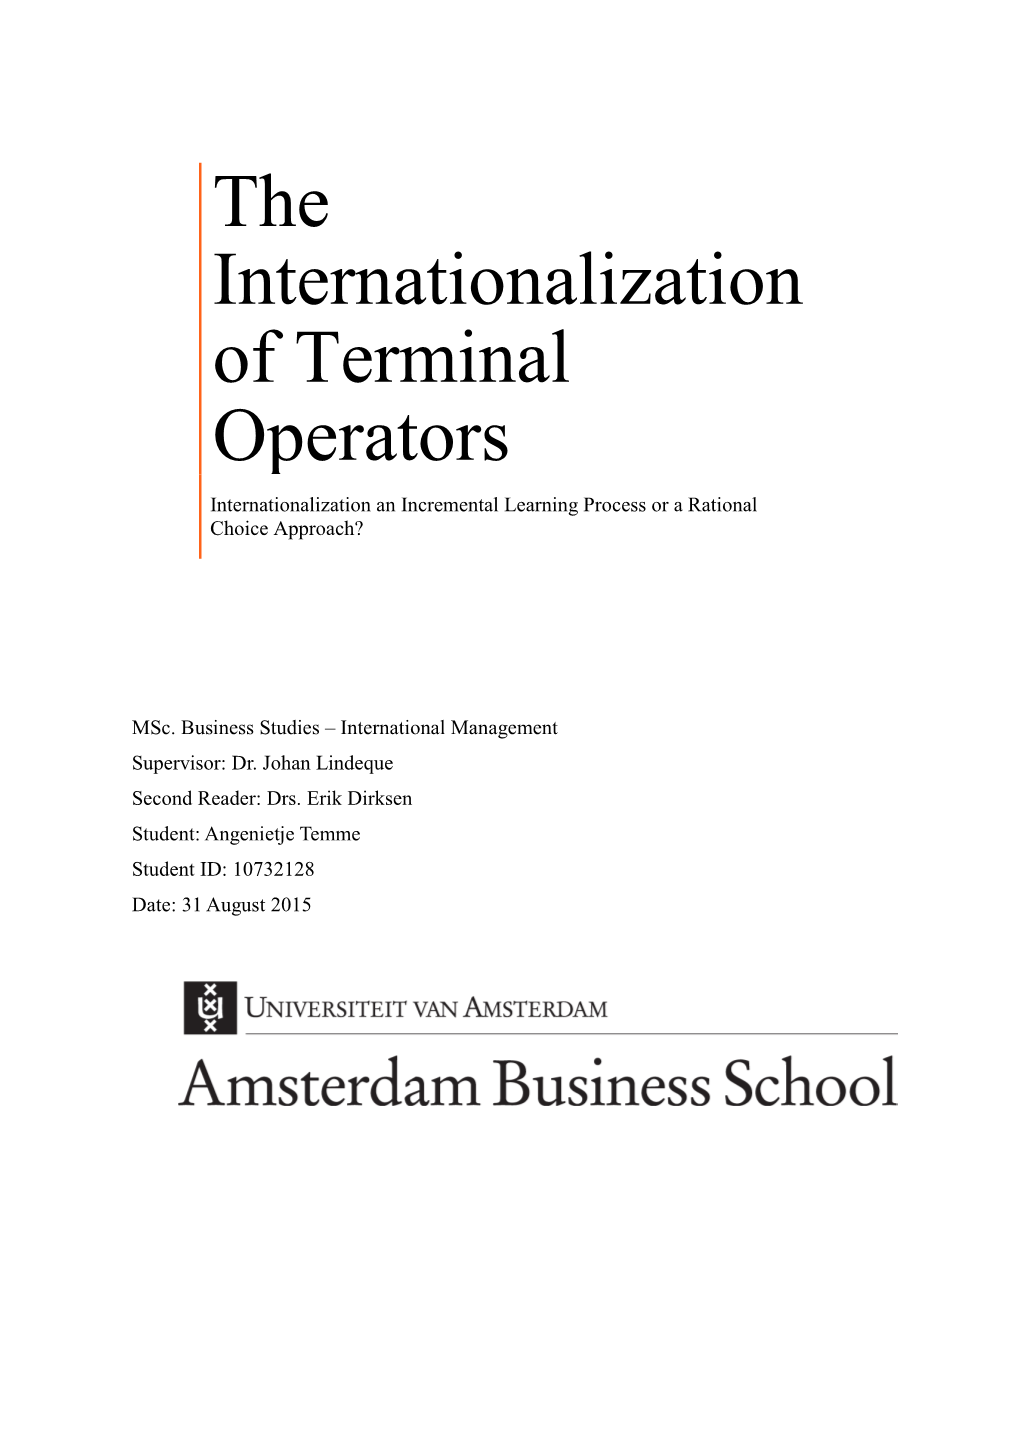 The Internationalization of Terminal Operators Resemble More a Rational Choice Approach to Internationalization